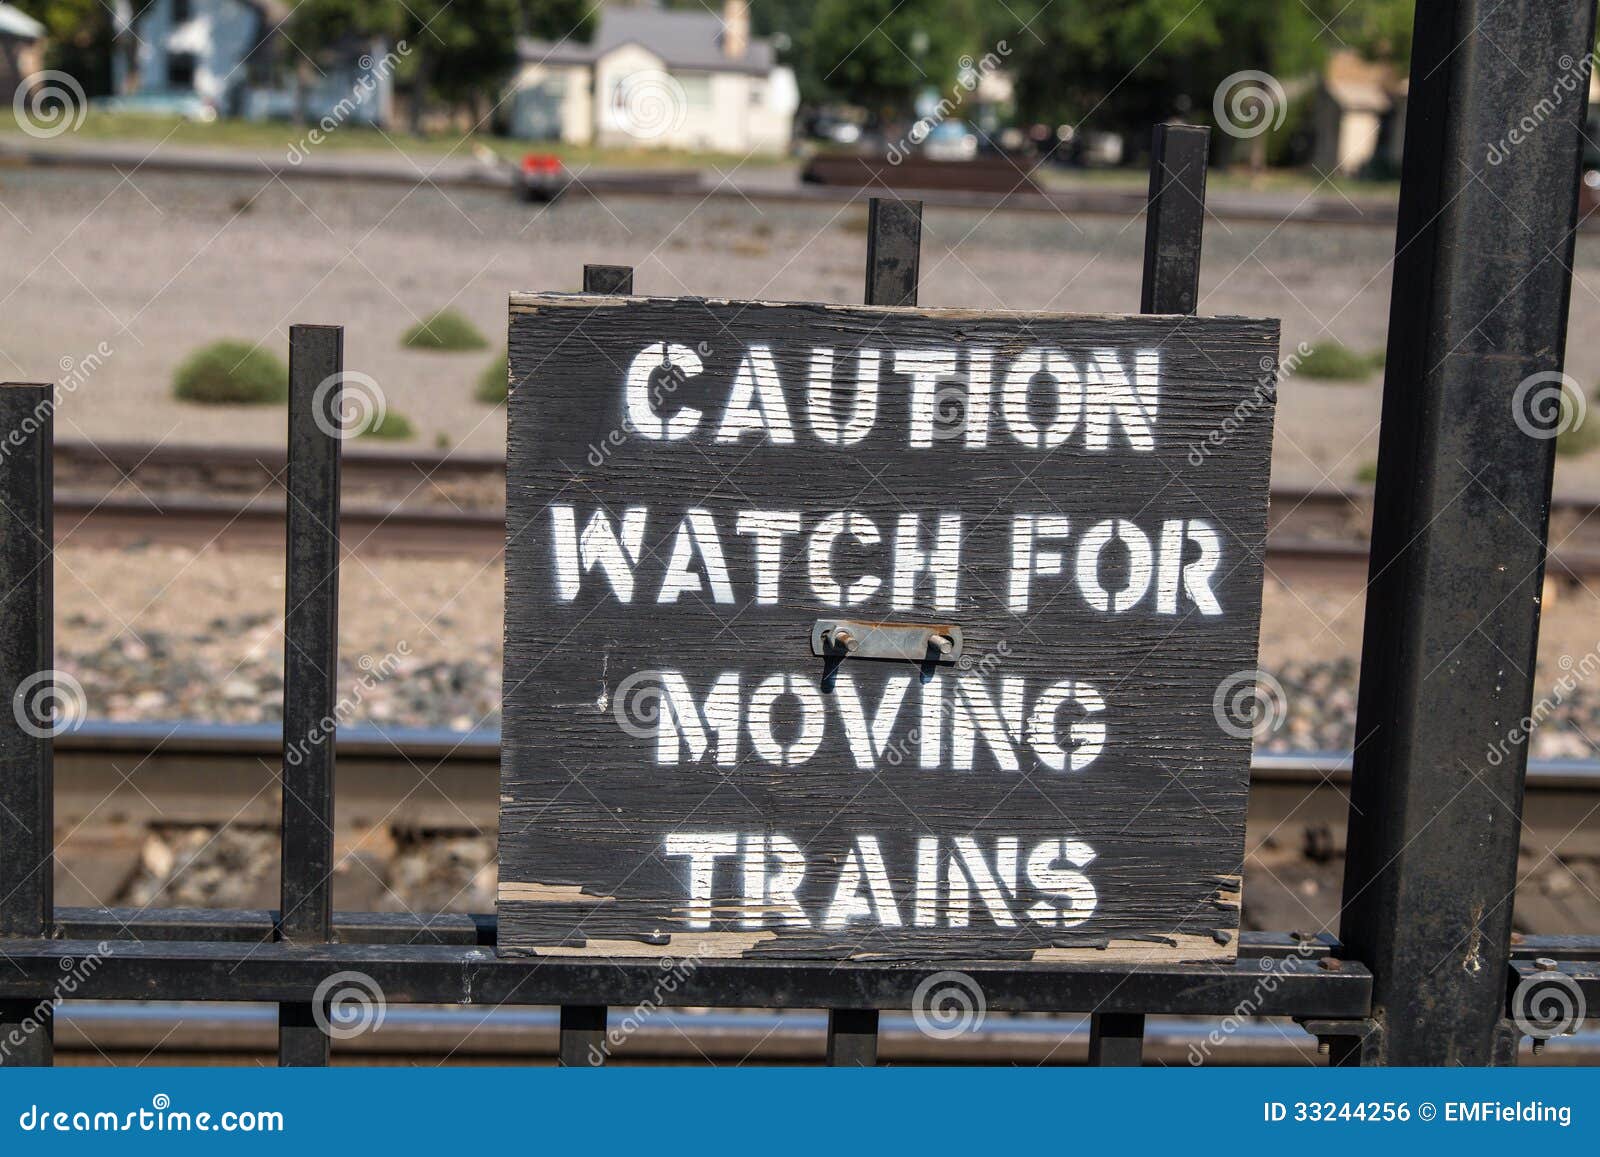 caution train sign